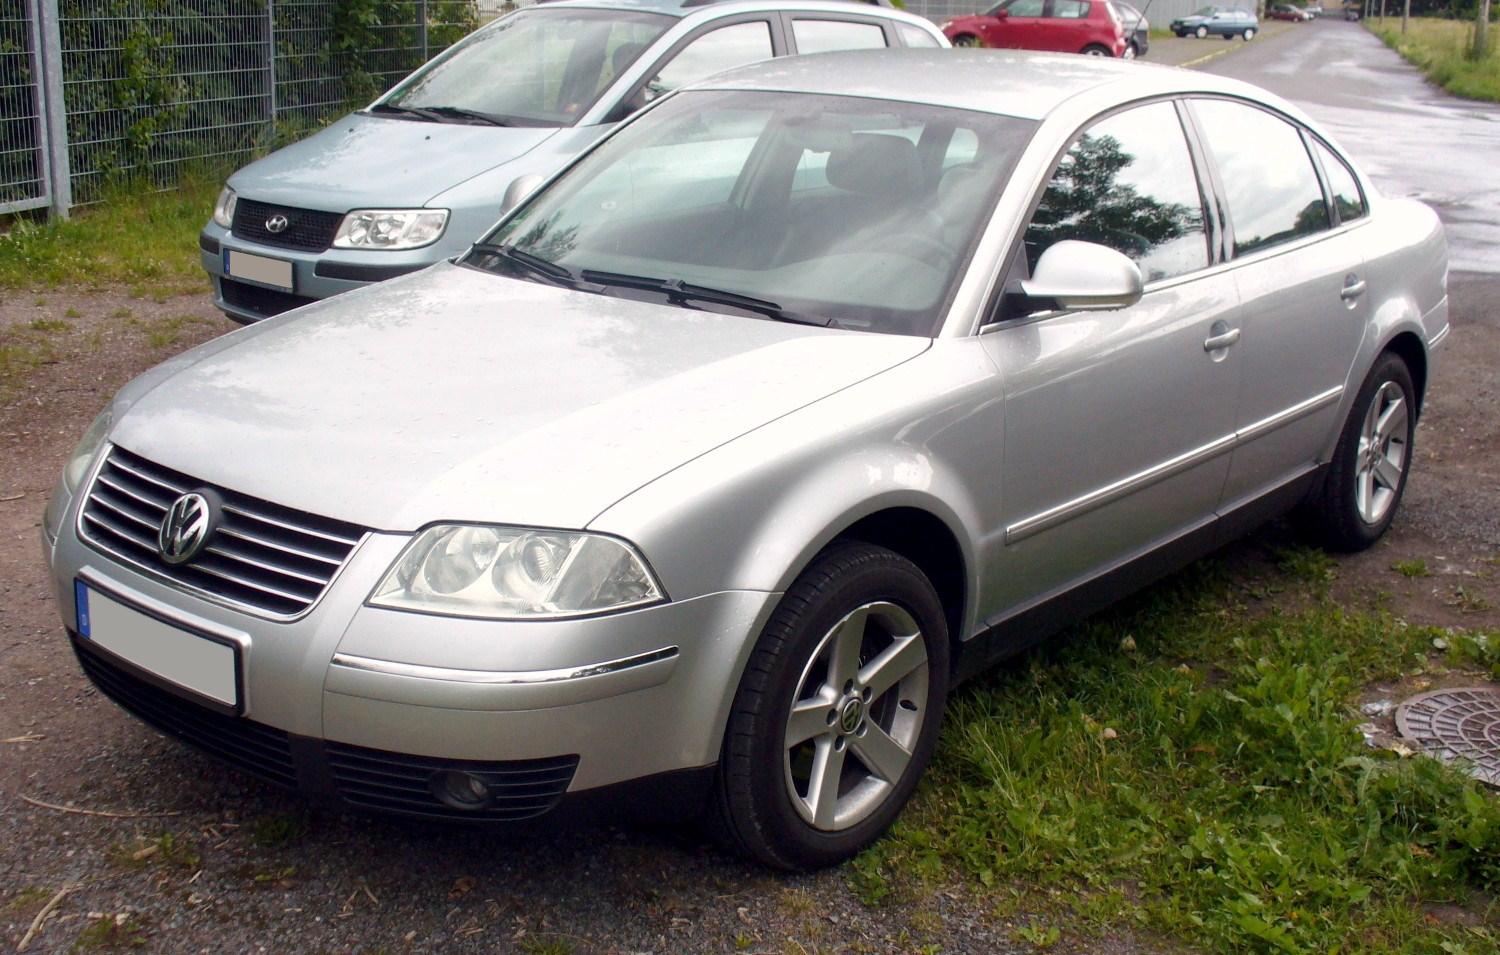 File:VW Passat B5 GP 2.0.JPG - Wikimedia Commons